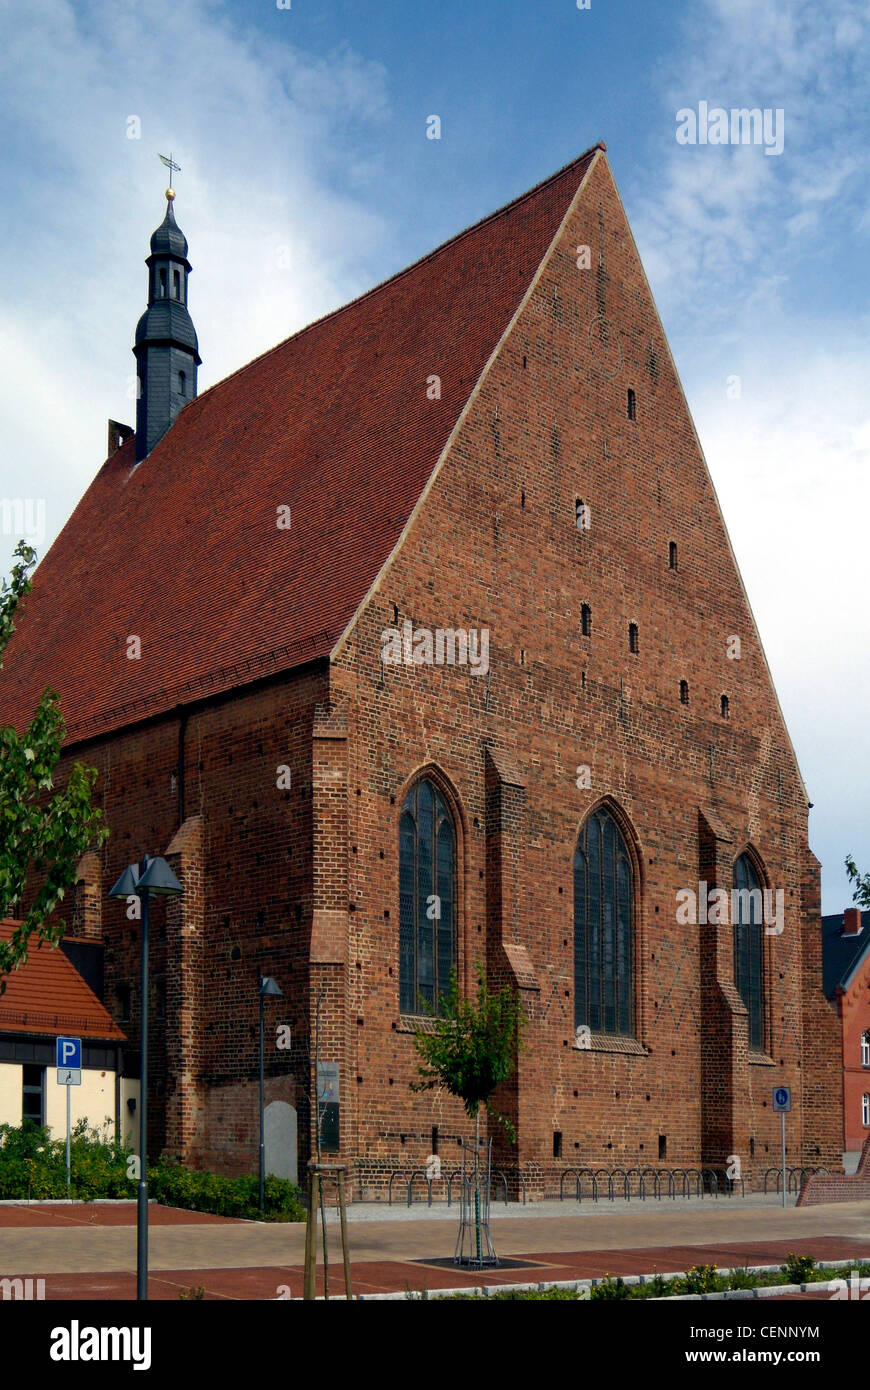 Ancien monastère de la ville de Brandebourg de Jueterbog. Banque D'Images